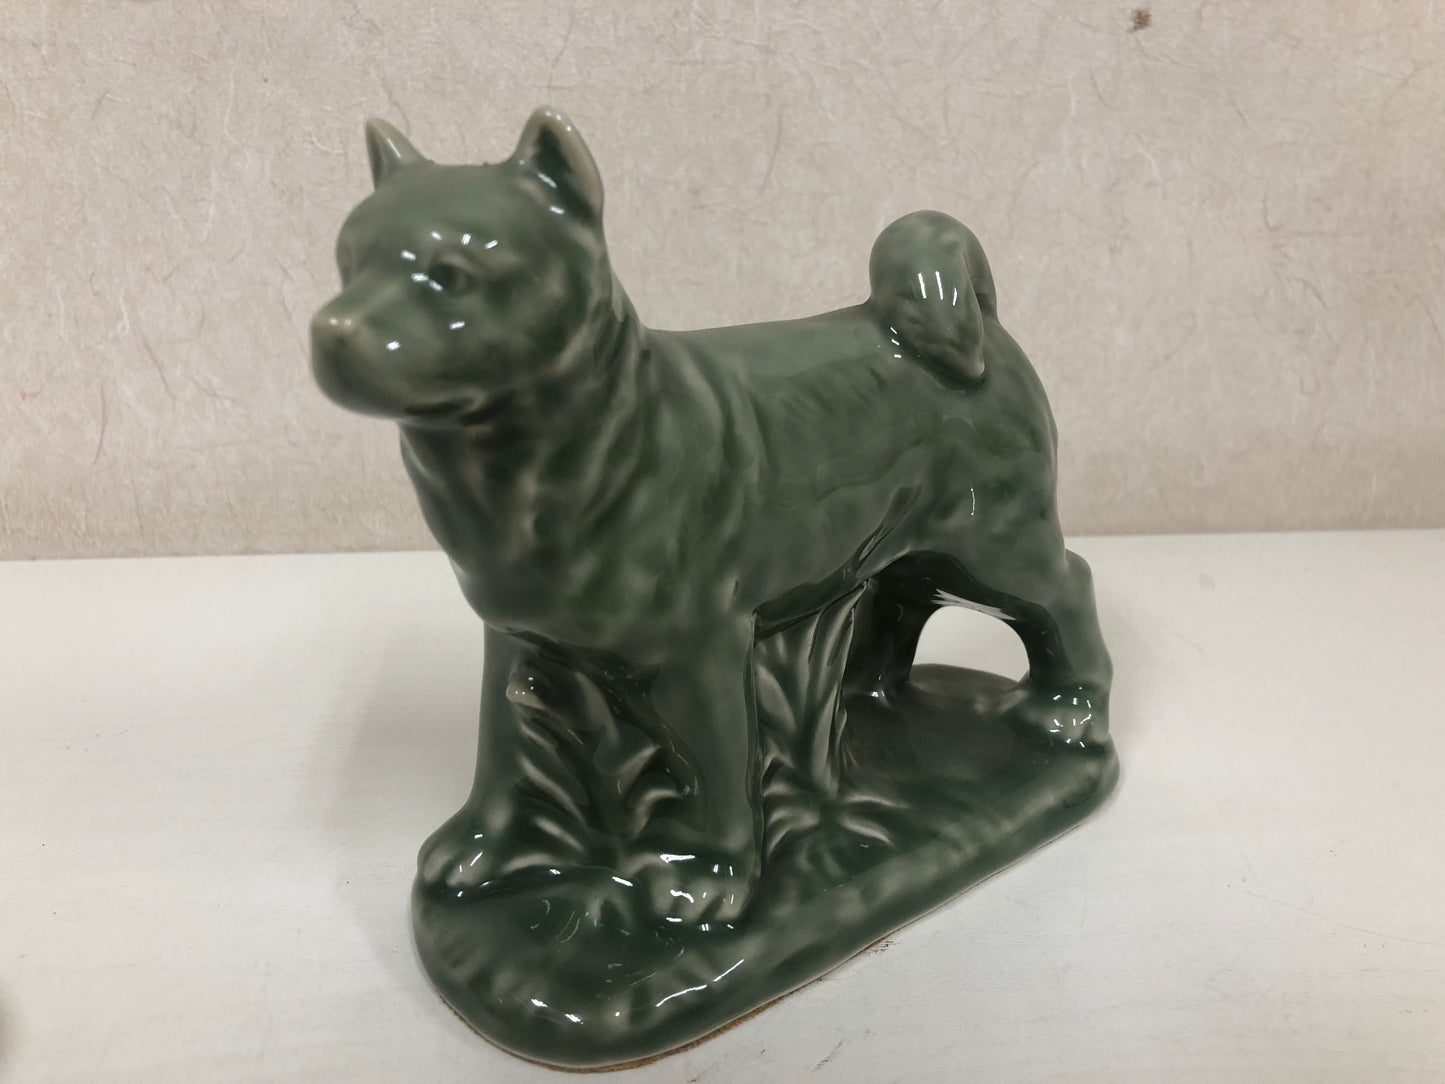 Y4090 OKIMONO Celadon Dog figure ceramic figurine Japan antique vintage decor